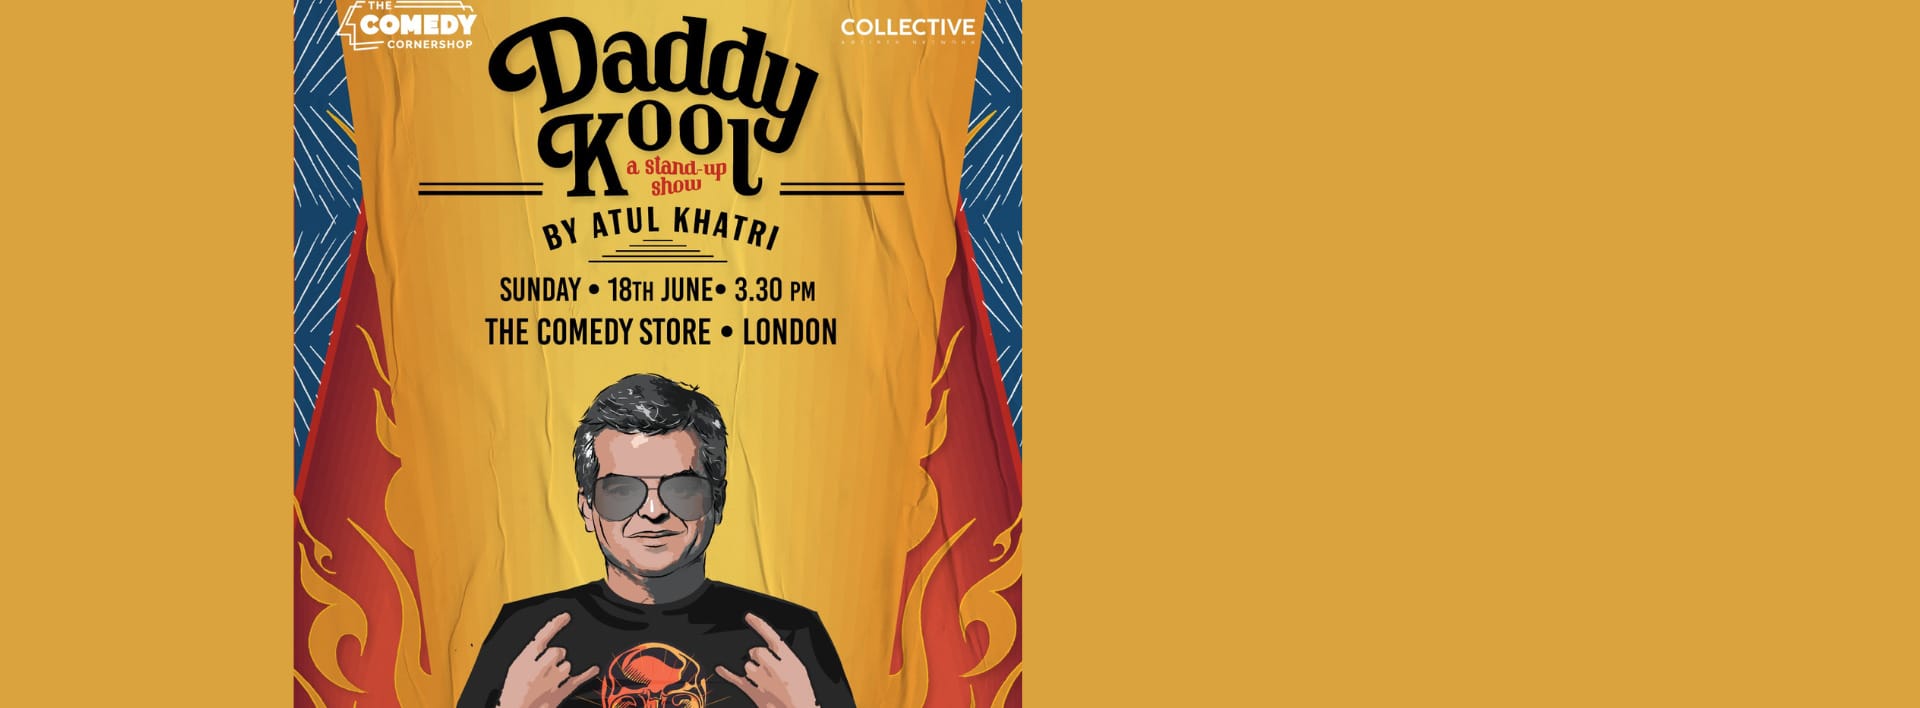 Atul Khatri live in London performing Daddy Kool